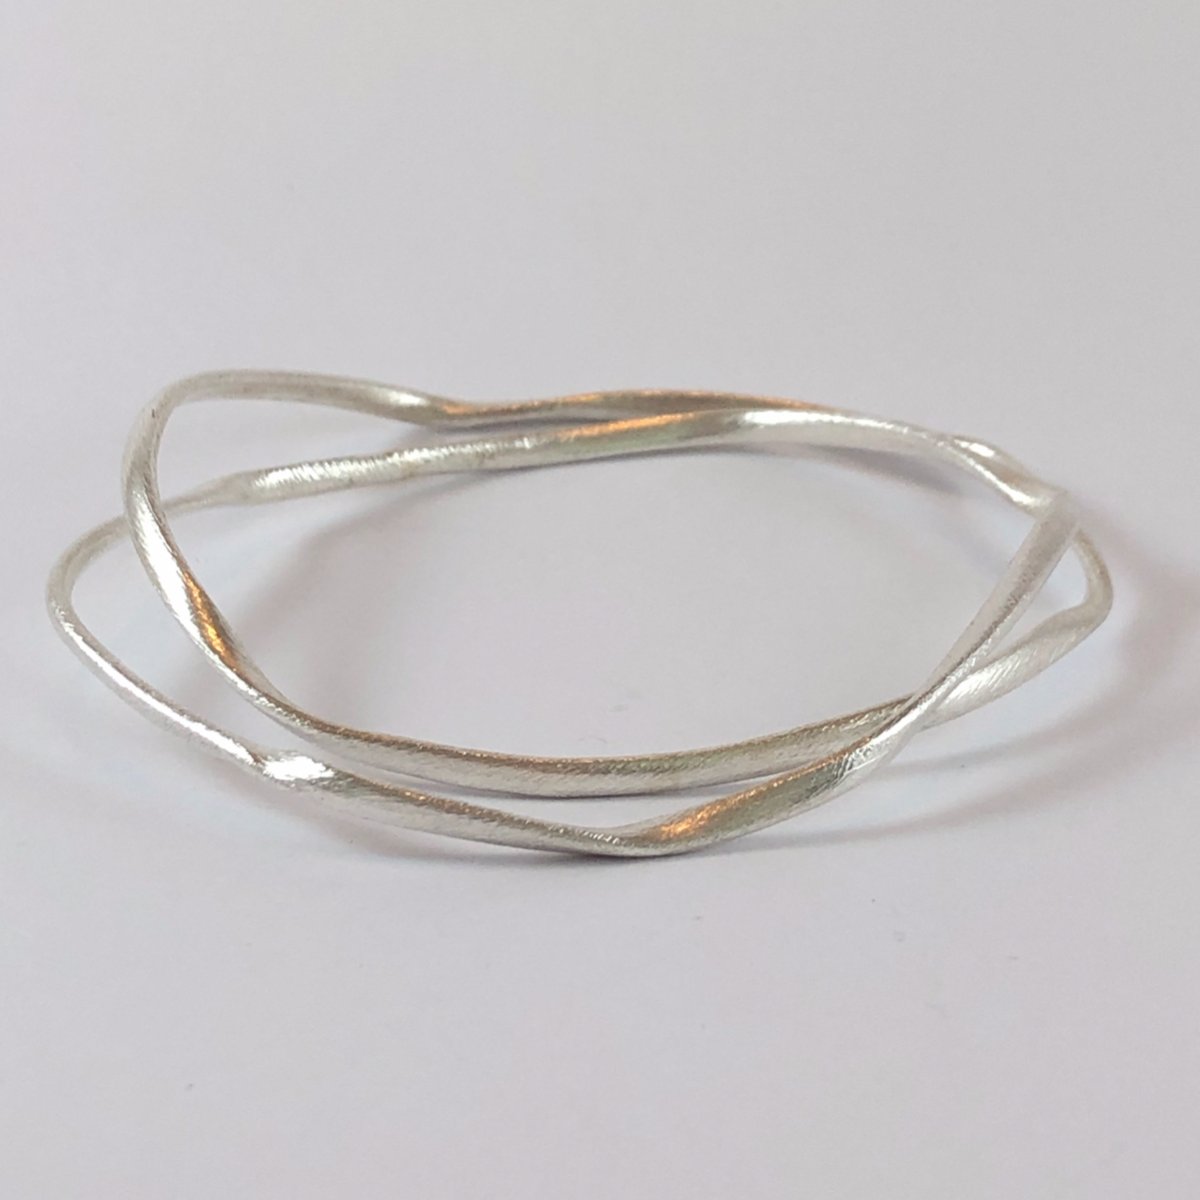 Flair Bracelet - 2 links  -  Silver